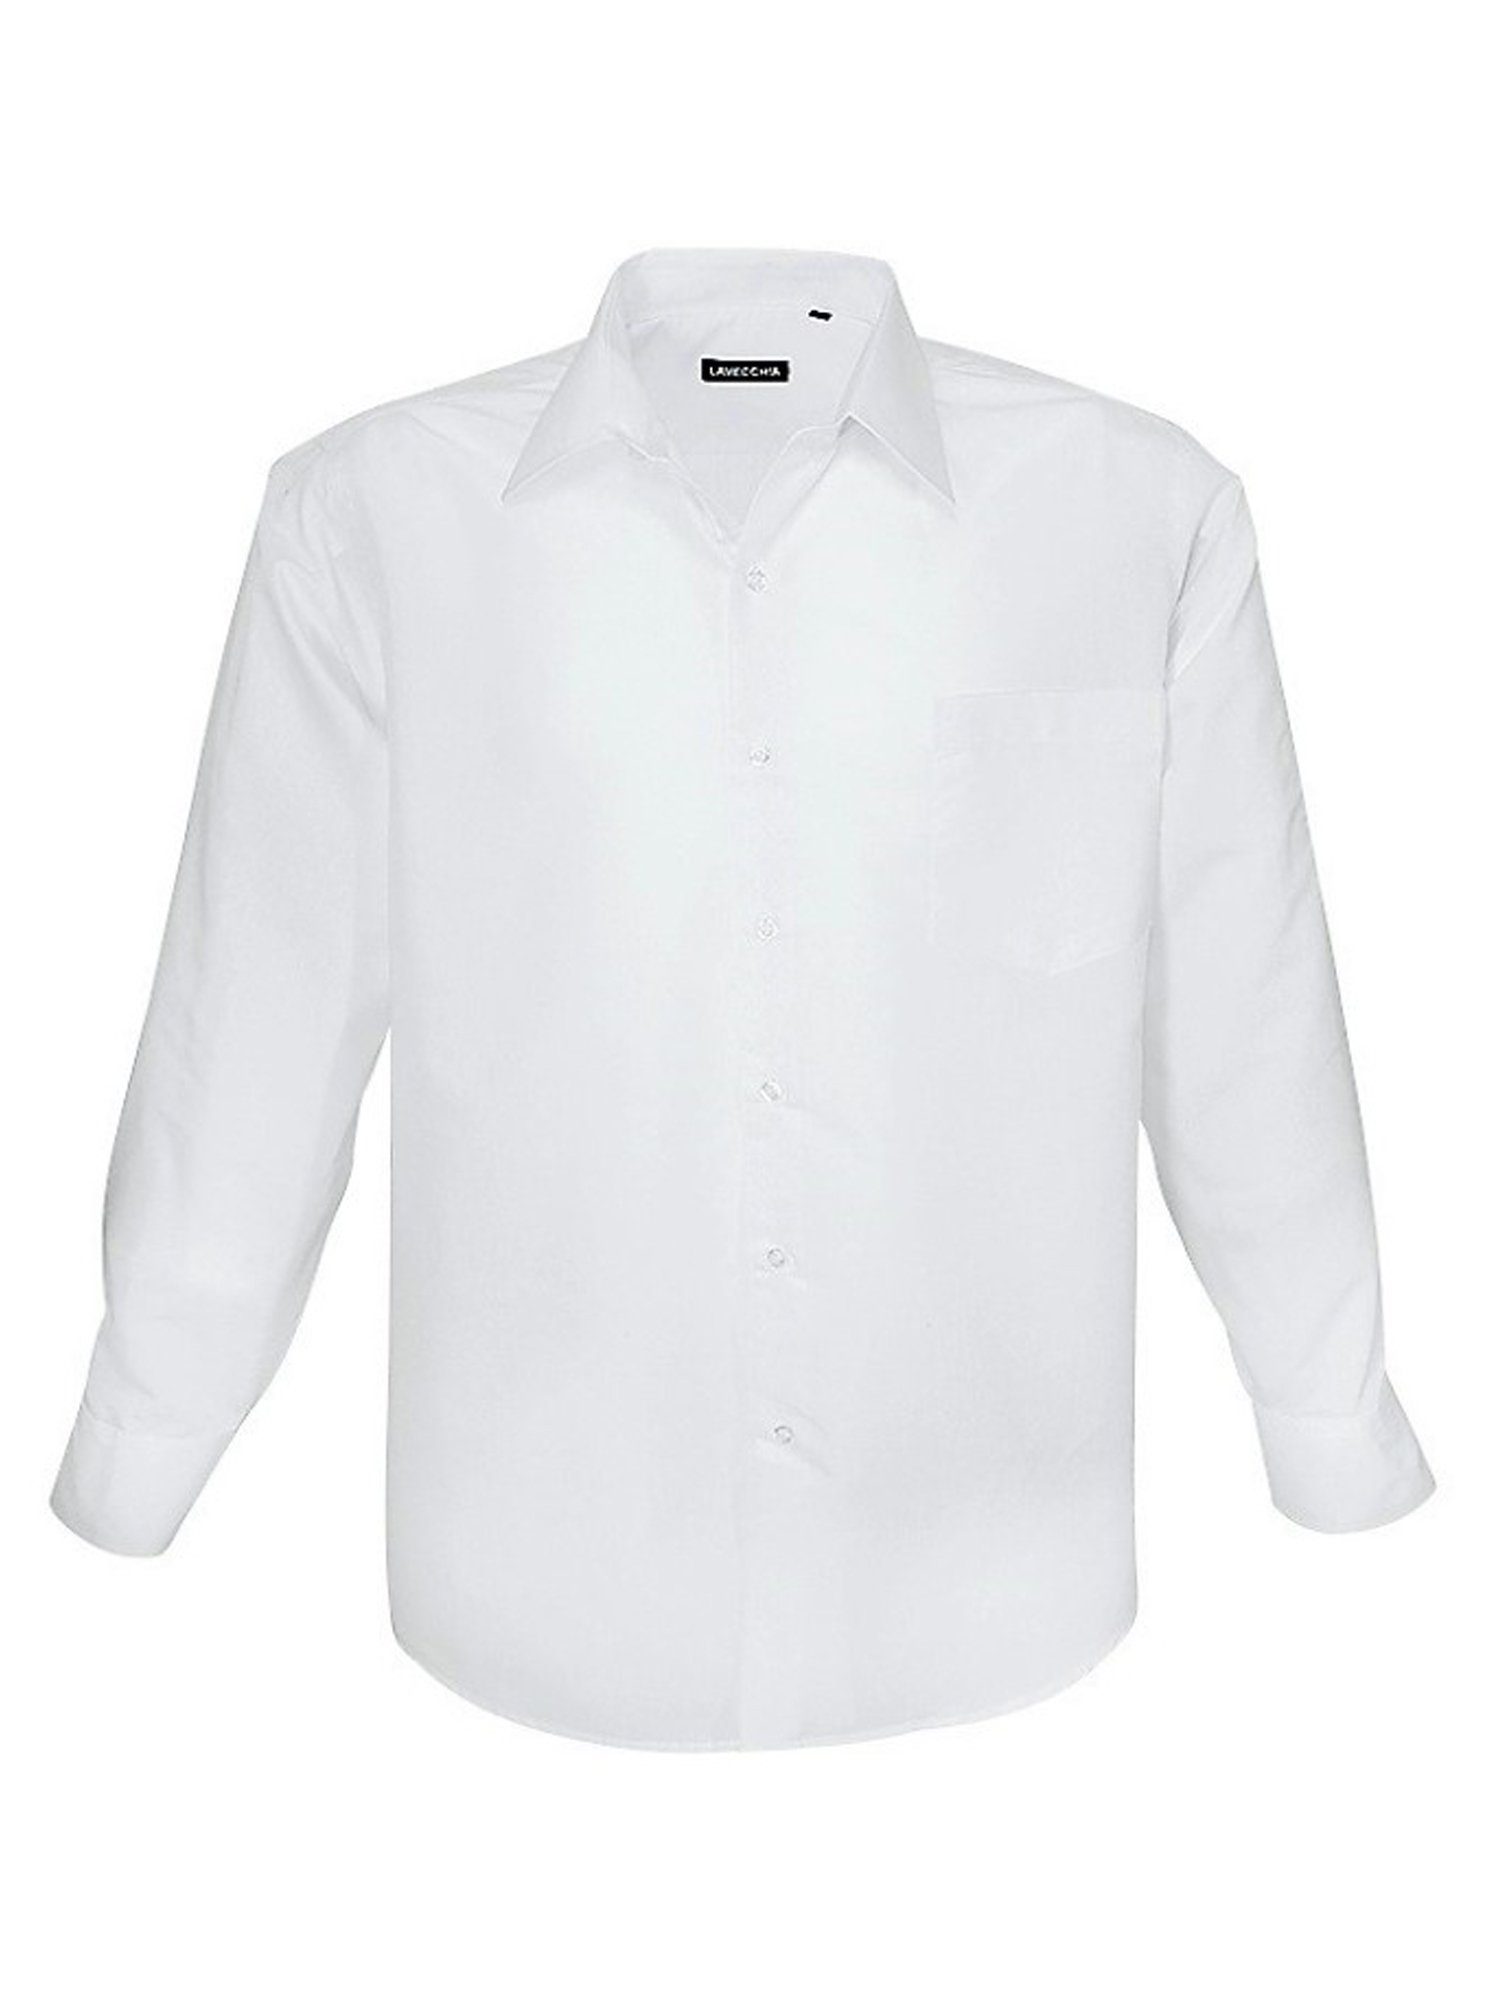 Lavecchia Langarmhemd Übergrößen Herren HLA-1314 Herrenhemd Hemd Basic weiß